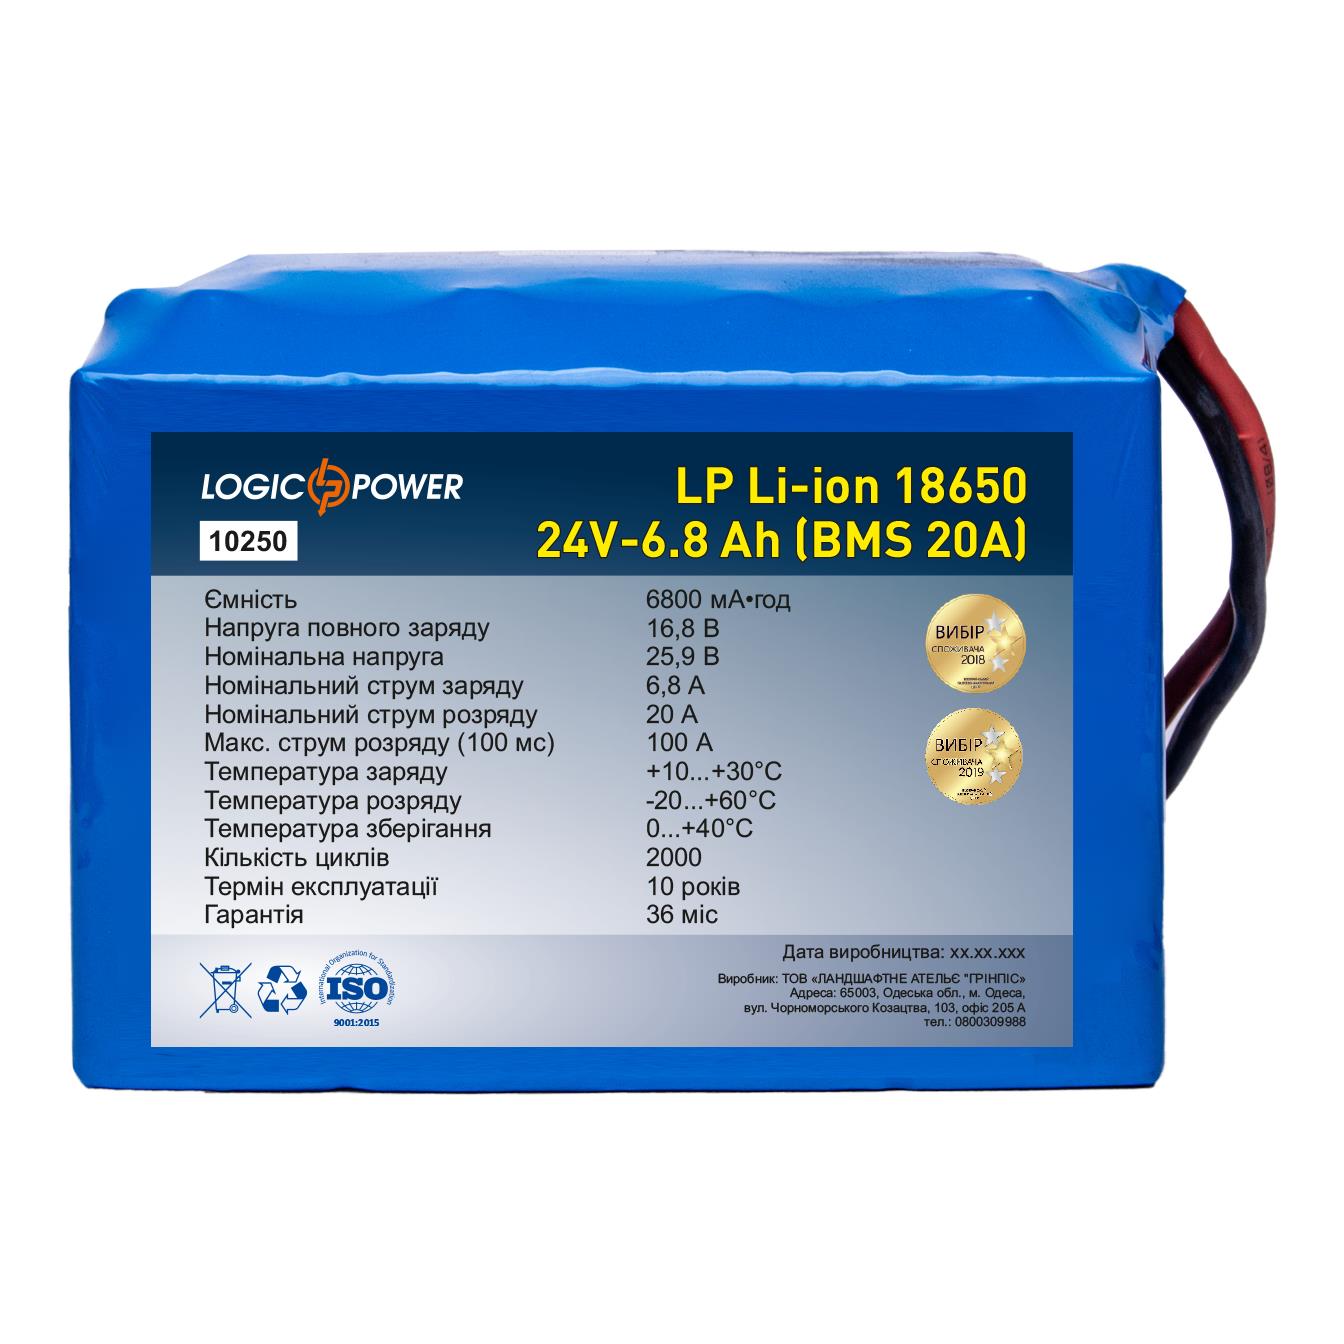 Аккумулятор литий-ионный LogicPower LP Li-ion 18650 24V - 6.8 Ah (BMS 20A) (10250)